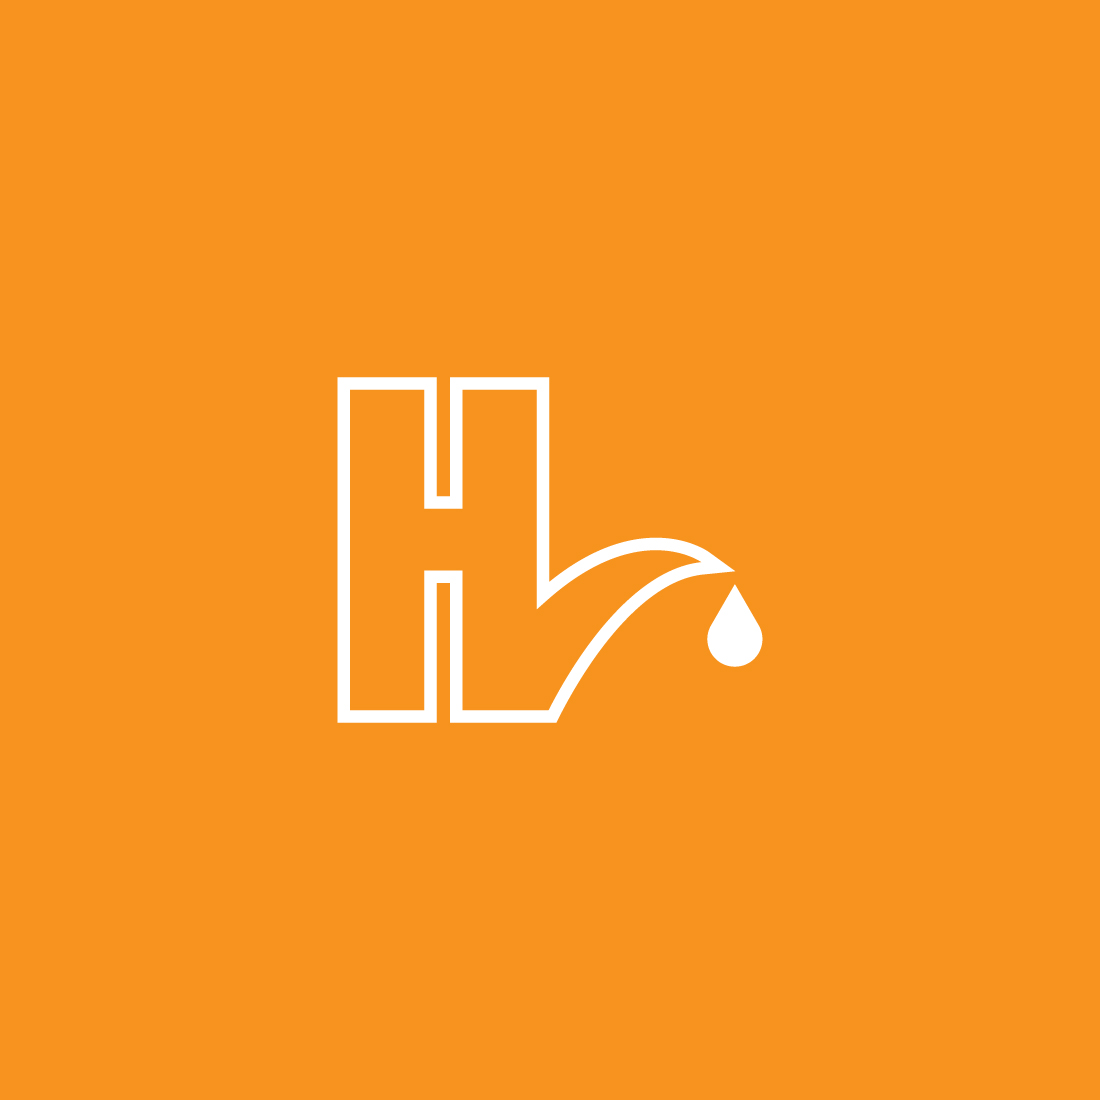 H Letter Logo preview image.